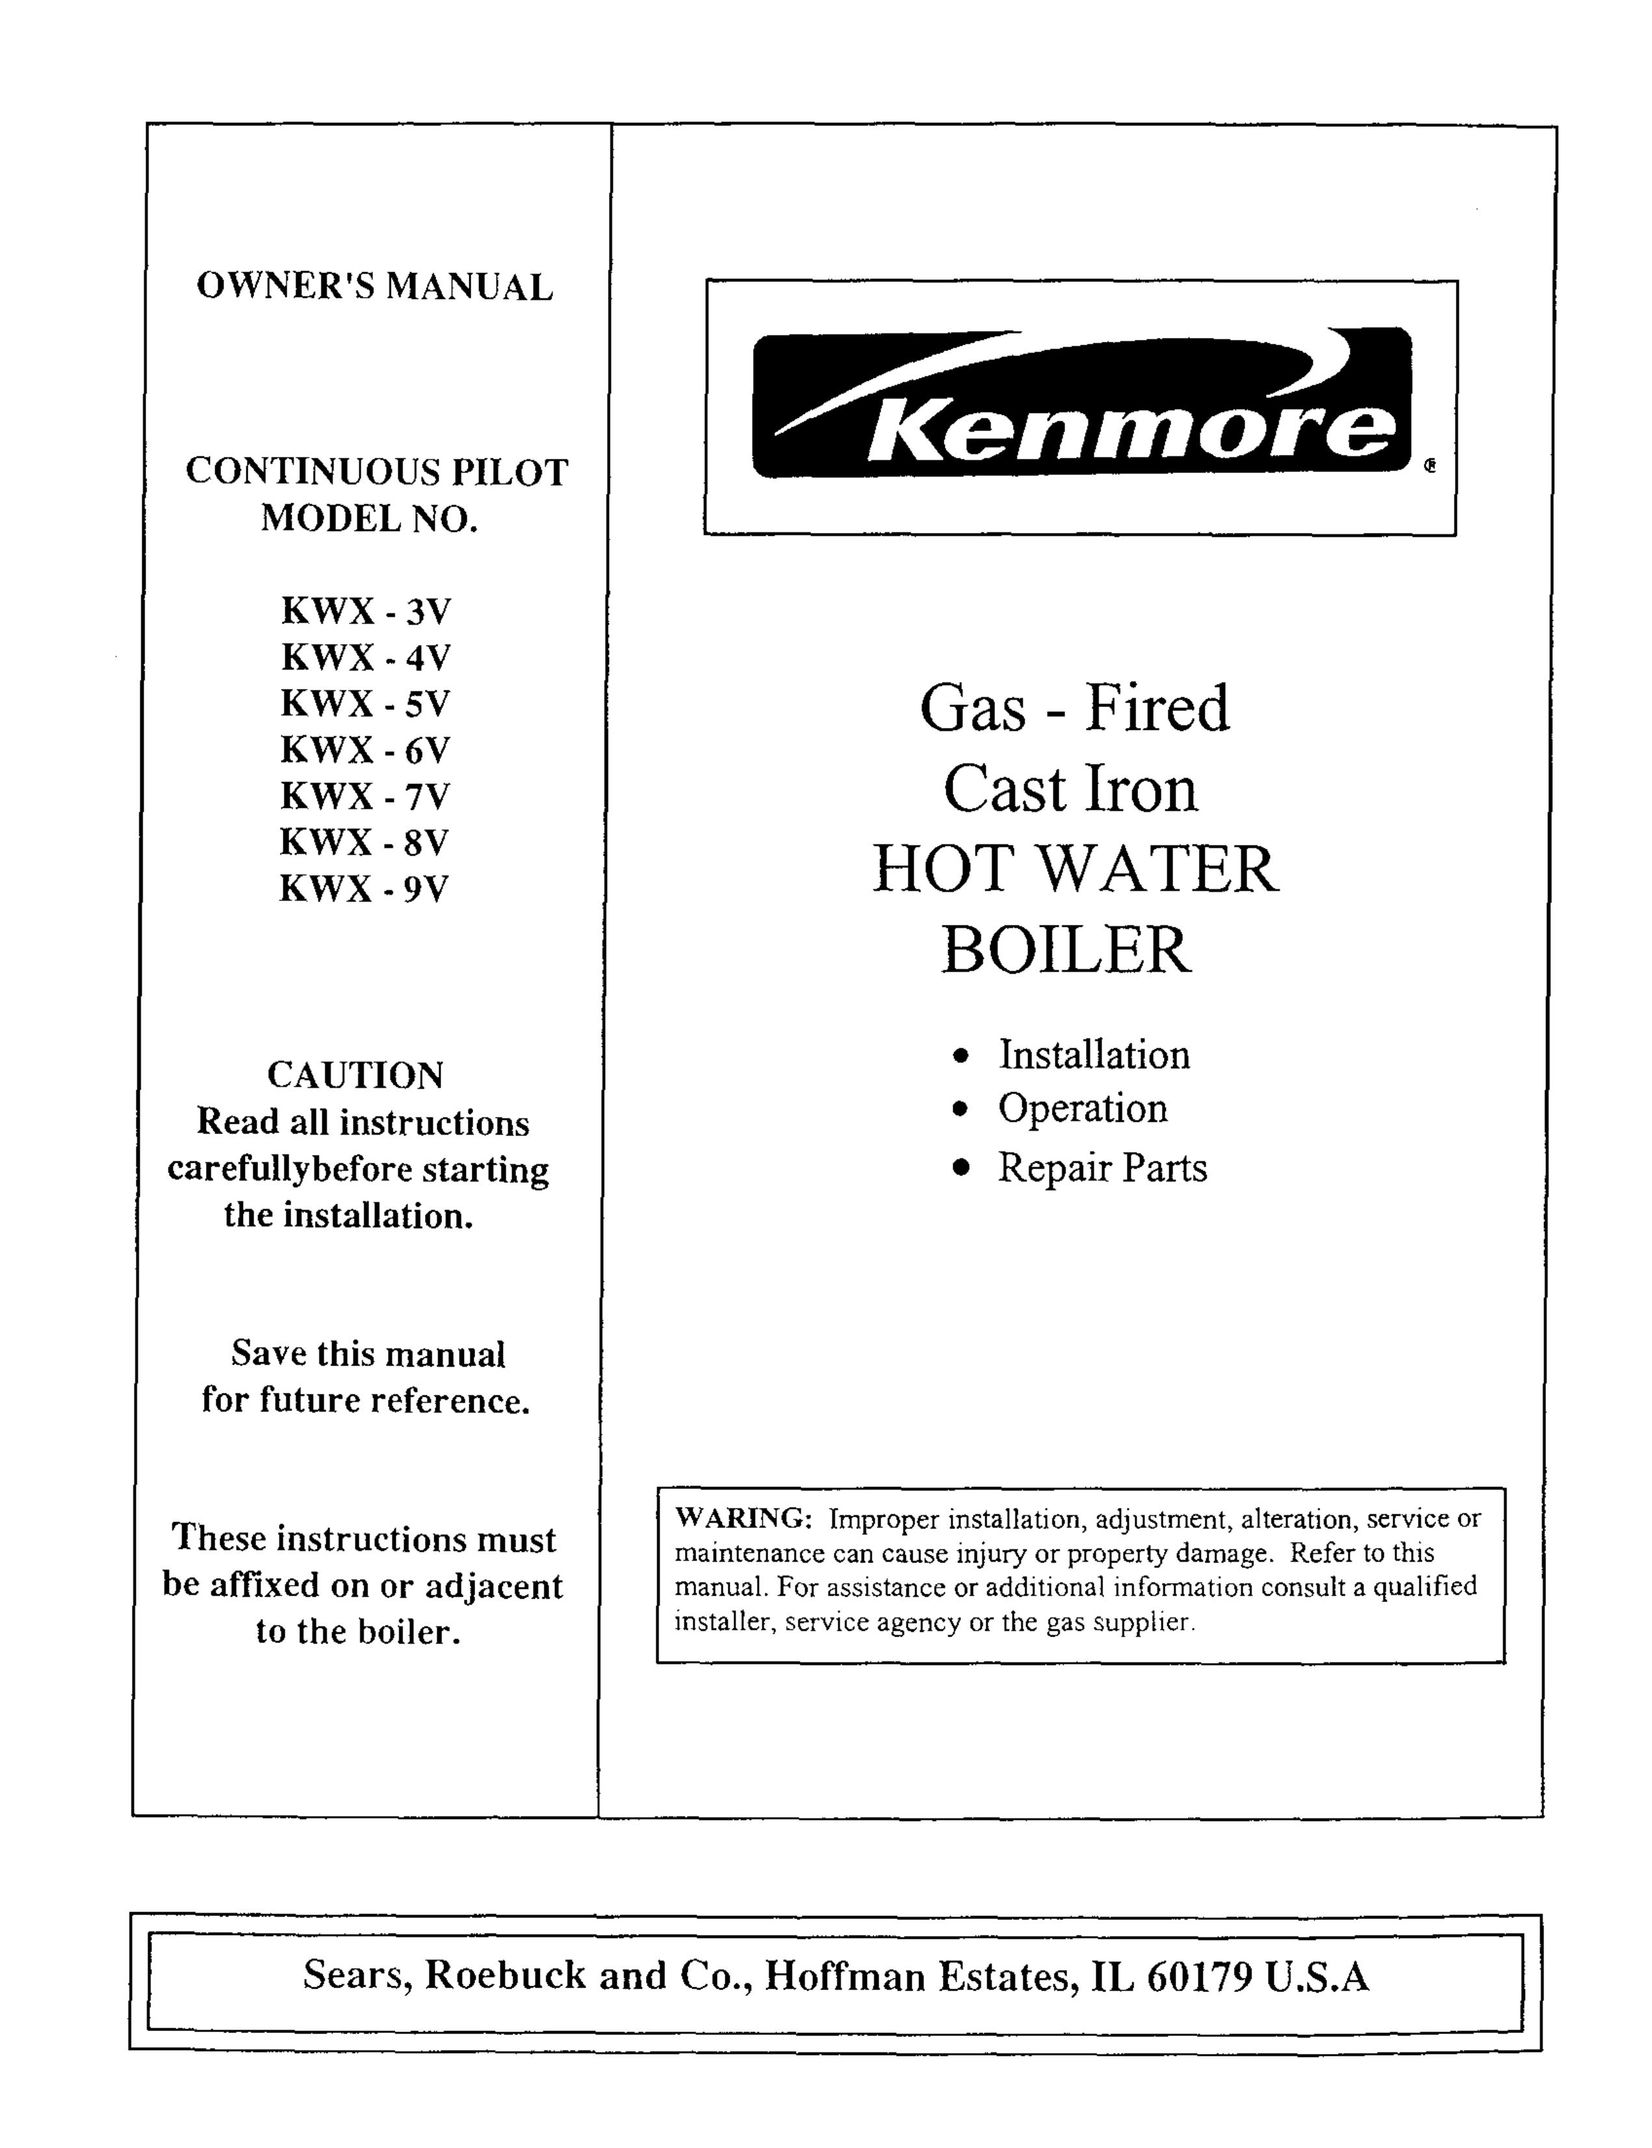 Kenmore KWX - 4V Boiler User Manual